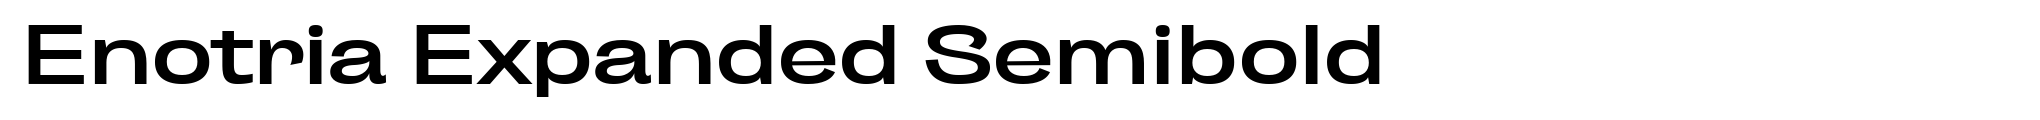 Enotria Expanded Semibold image